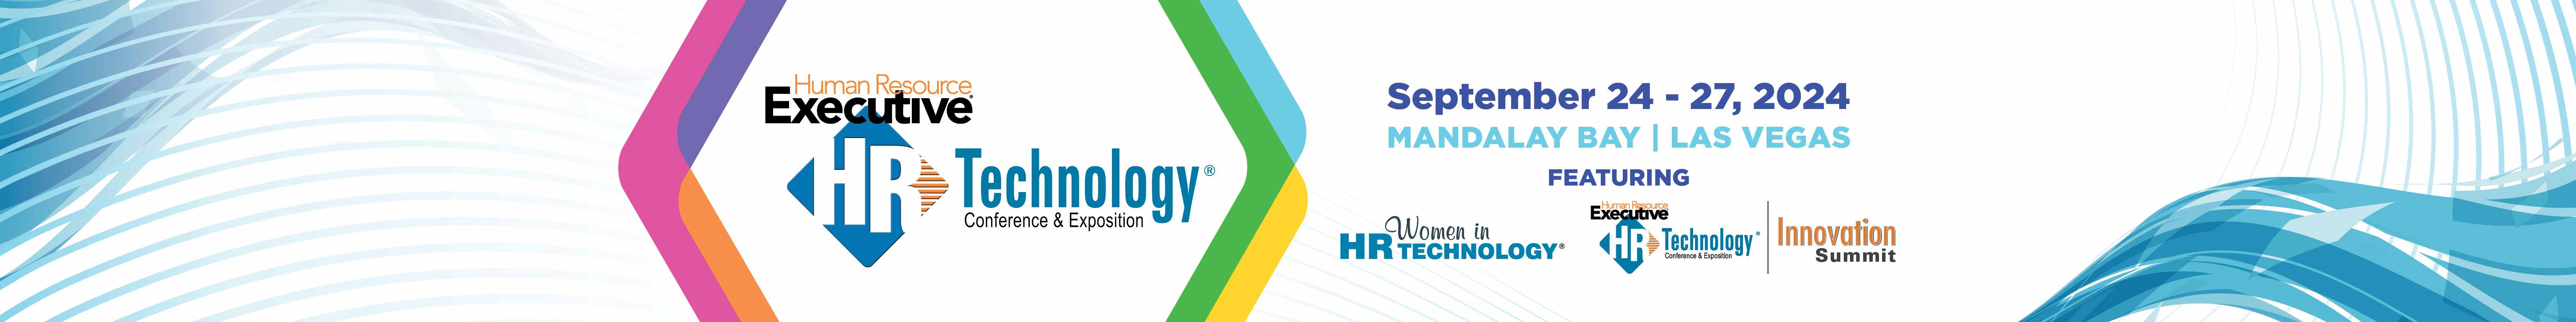 HR Tech September 24 - 27, 2024  | MANDALAY BAY | LAS VEGAS